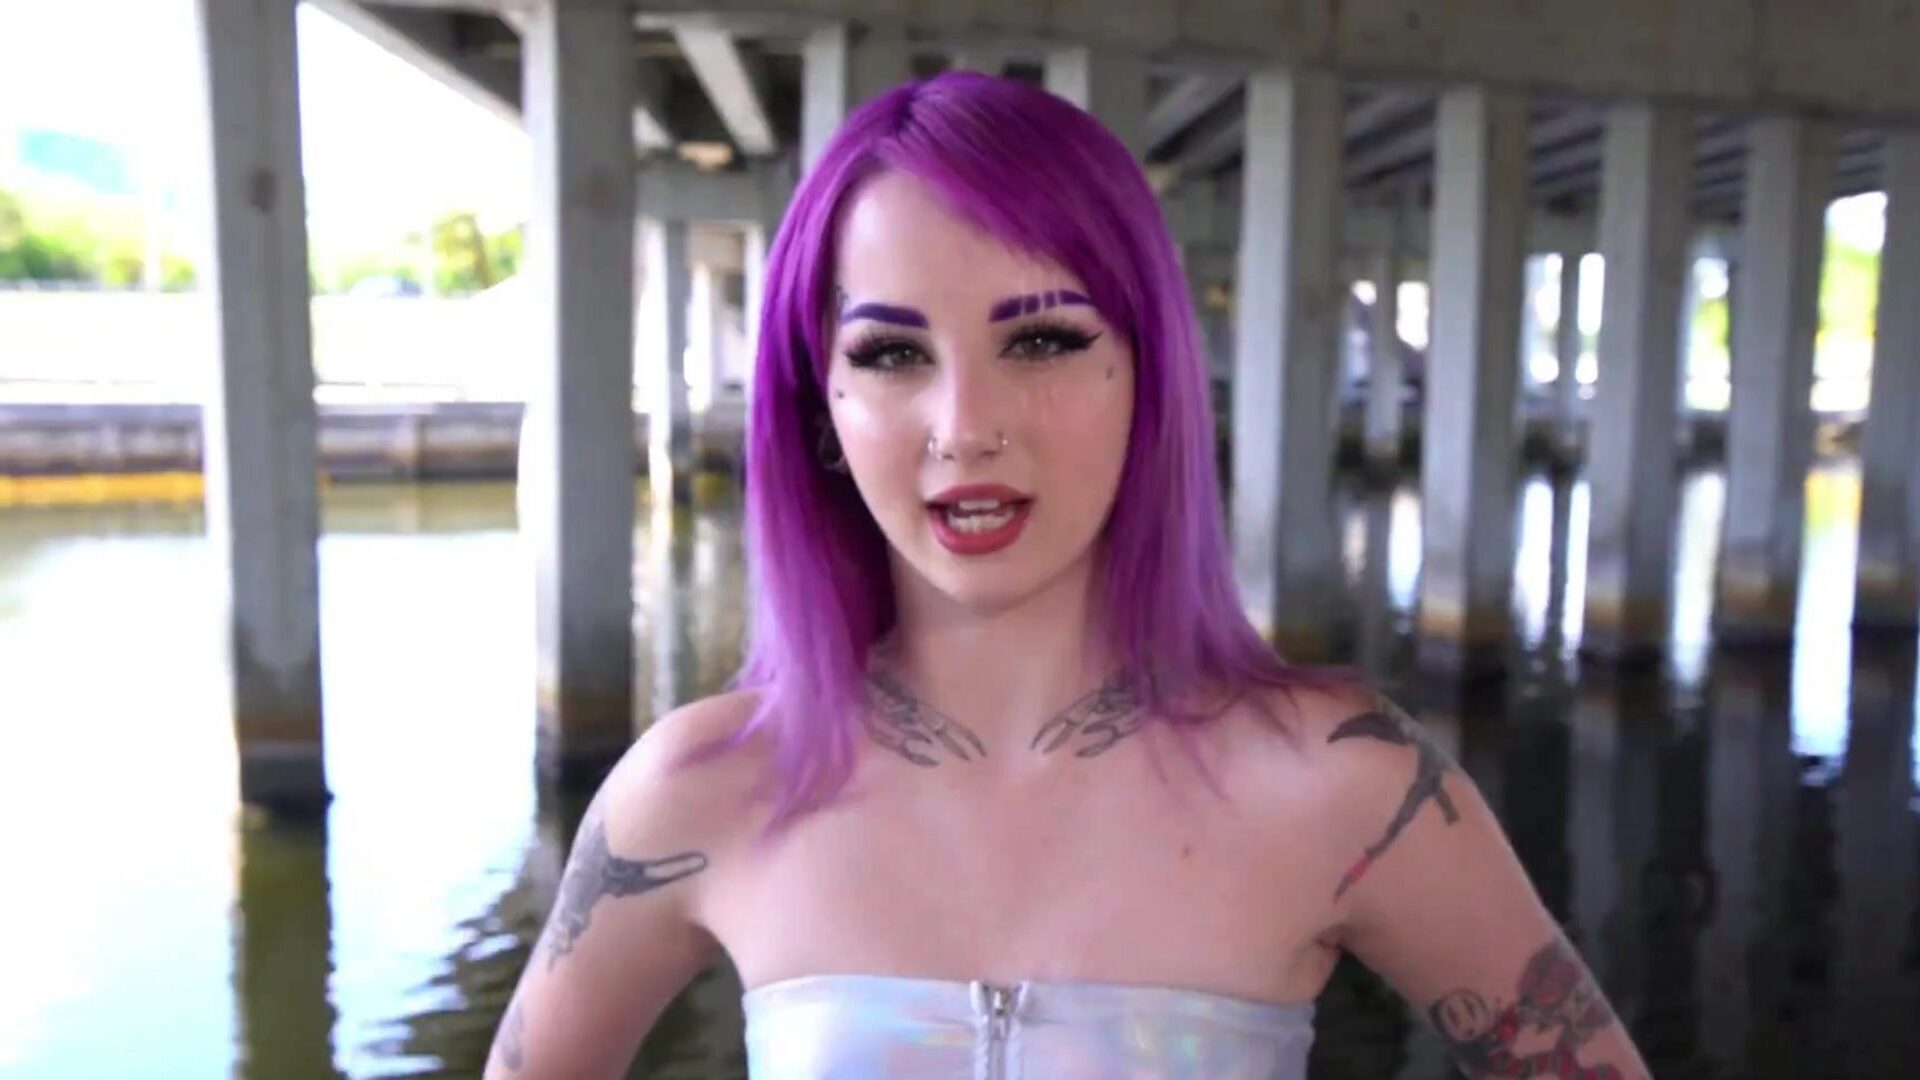 Hot Inked Purple Hair Punk Teen Gets Banged